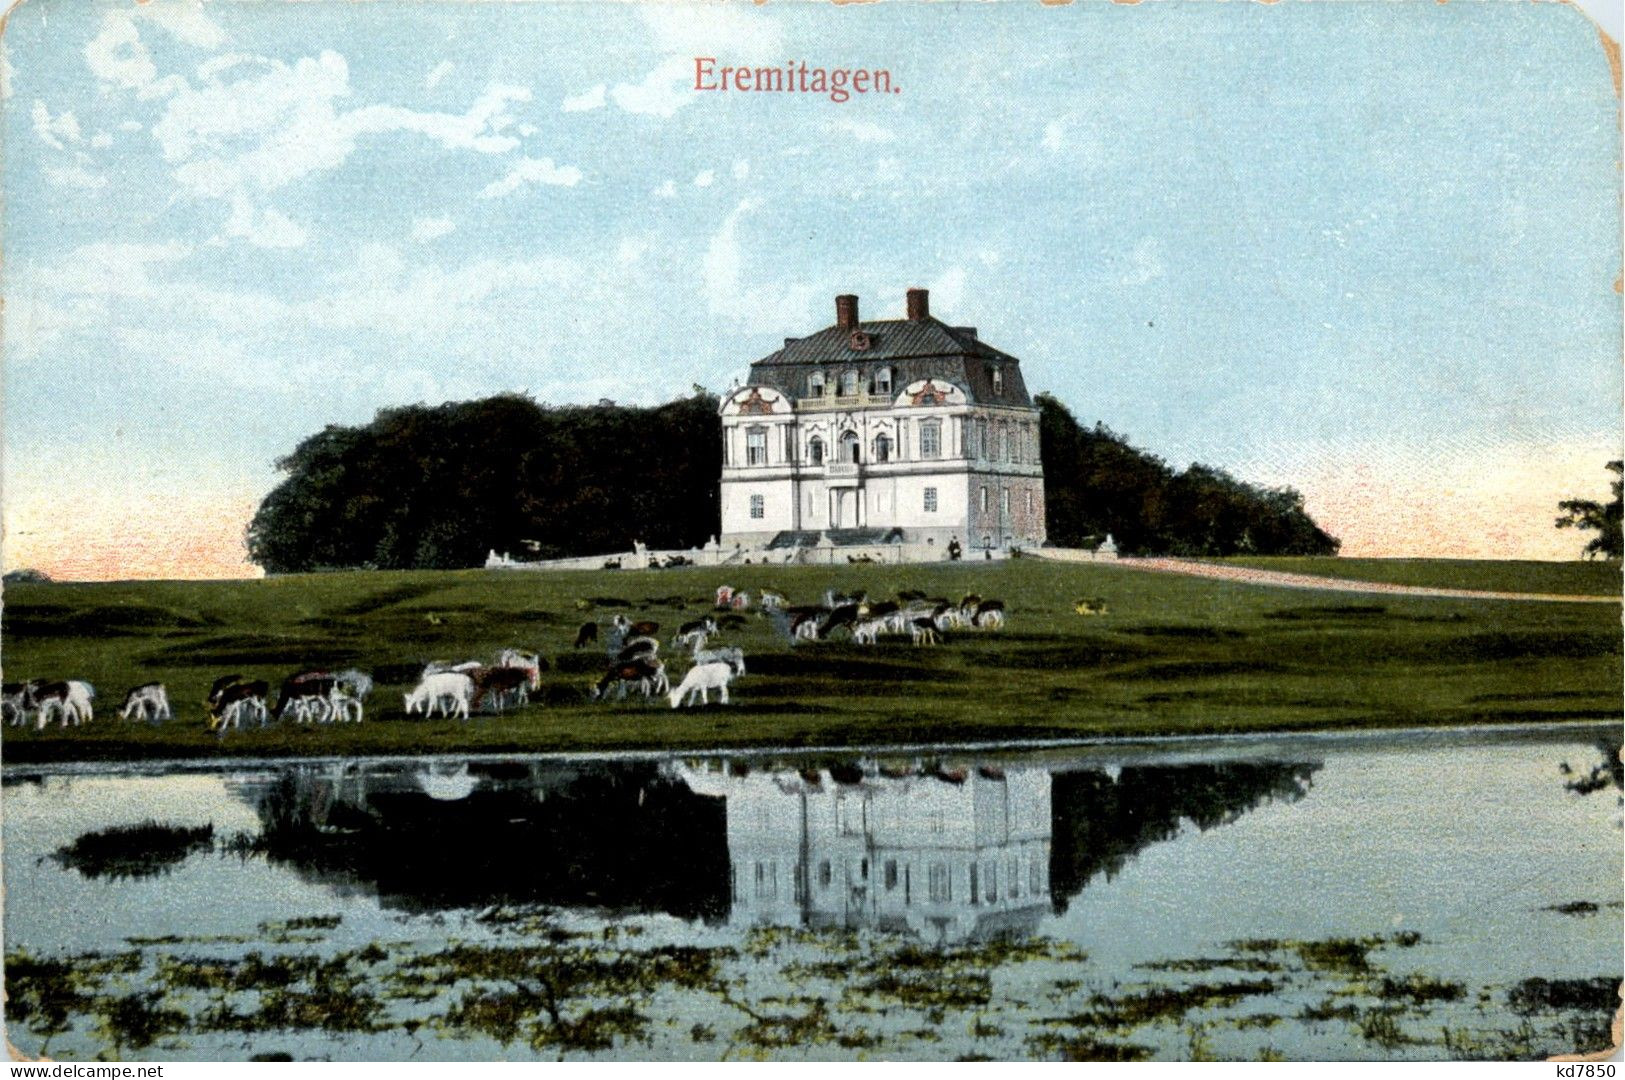 Eremitagen - Denmark